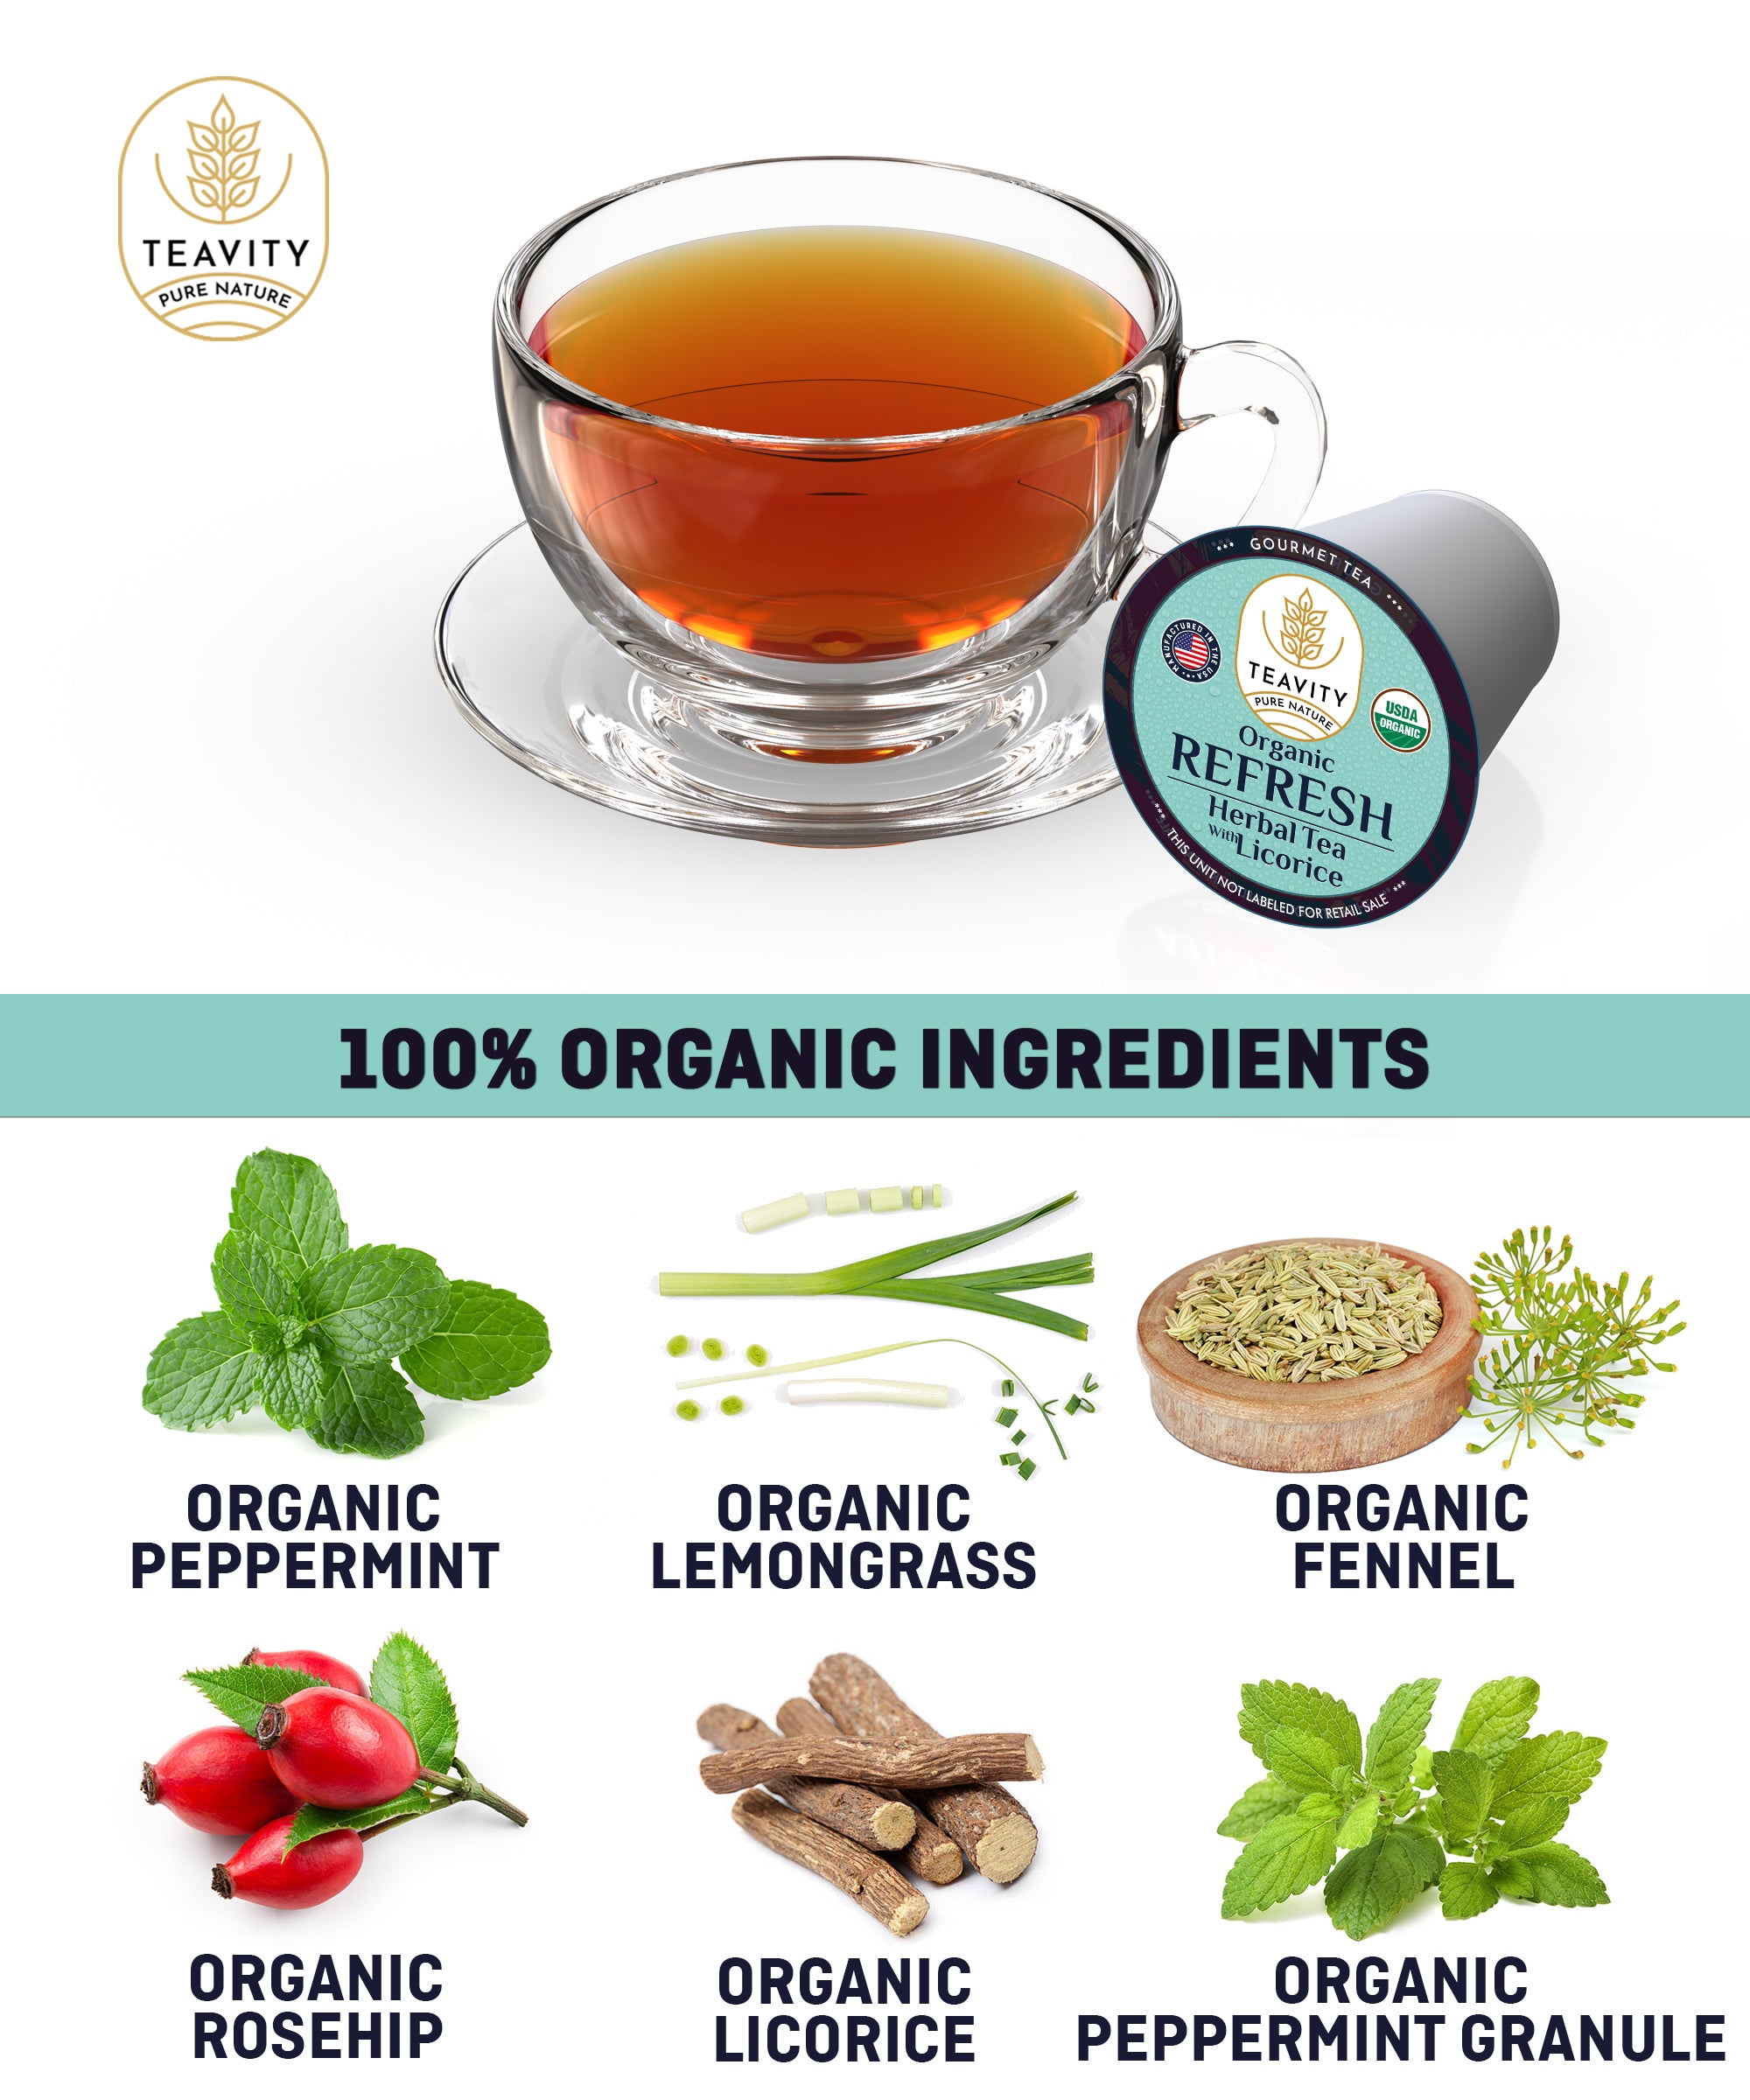 Organic Refresh Herbal Tea with Licorice